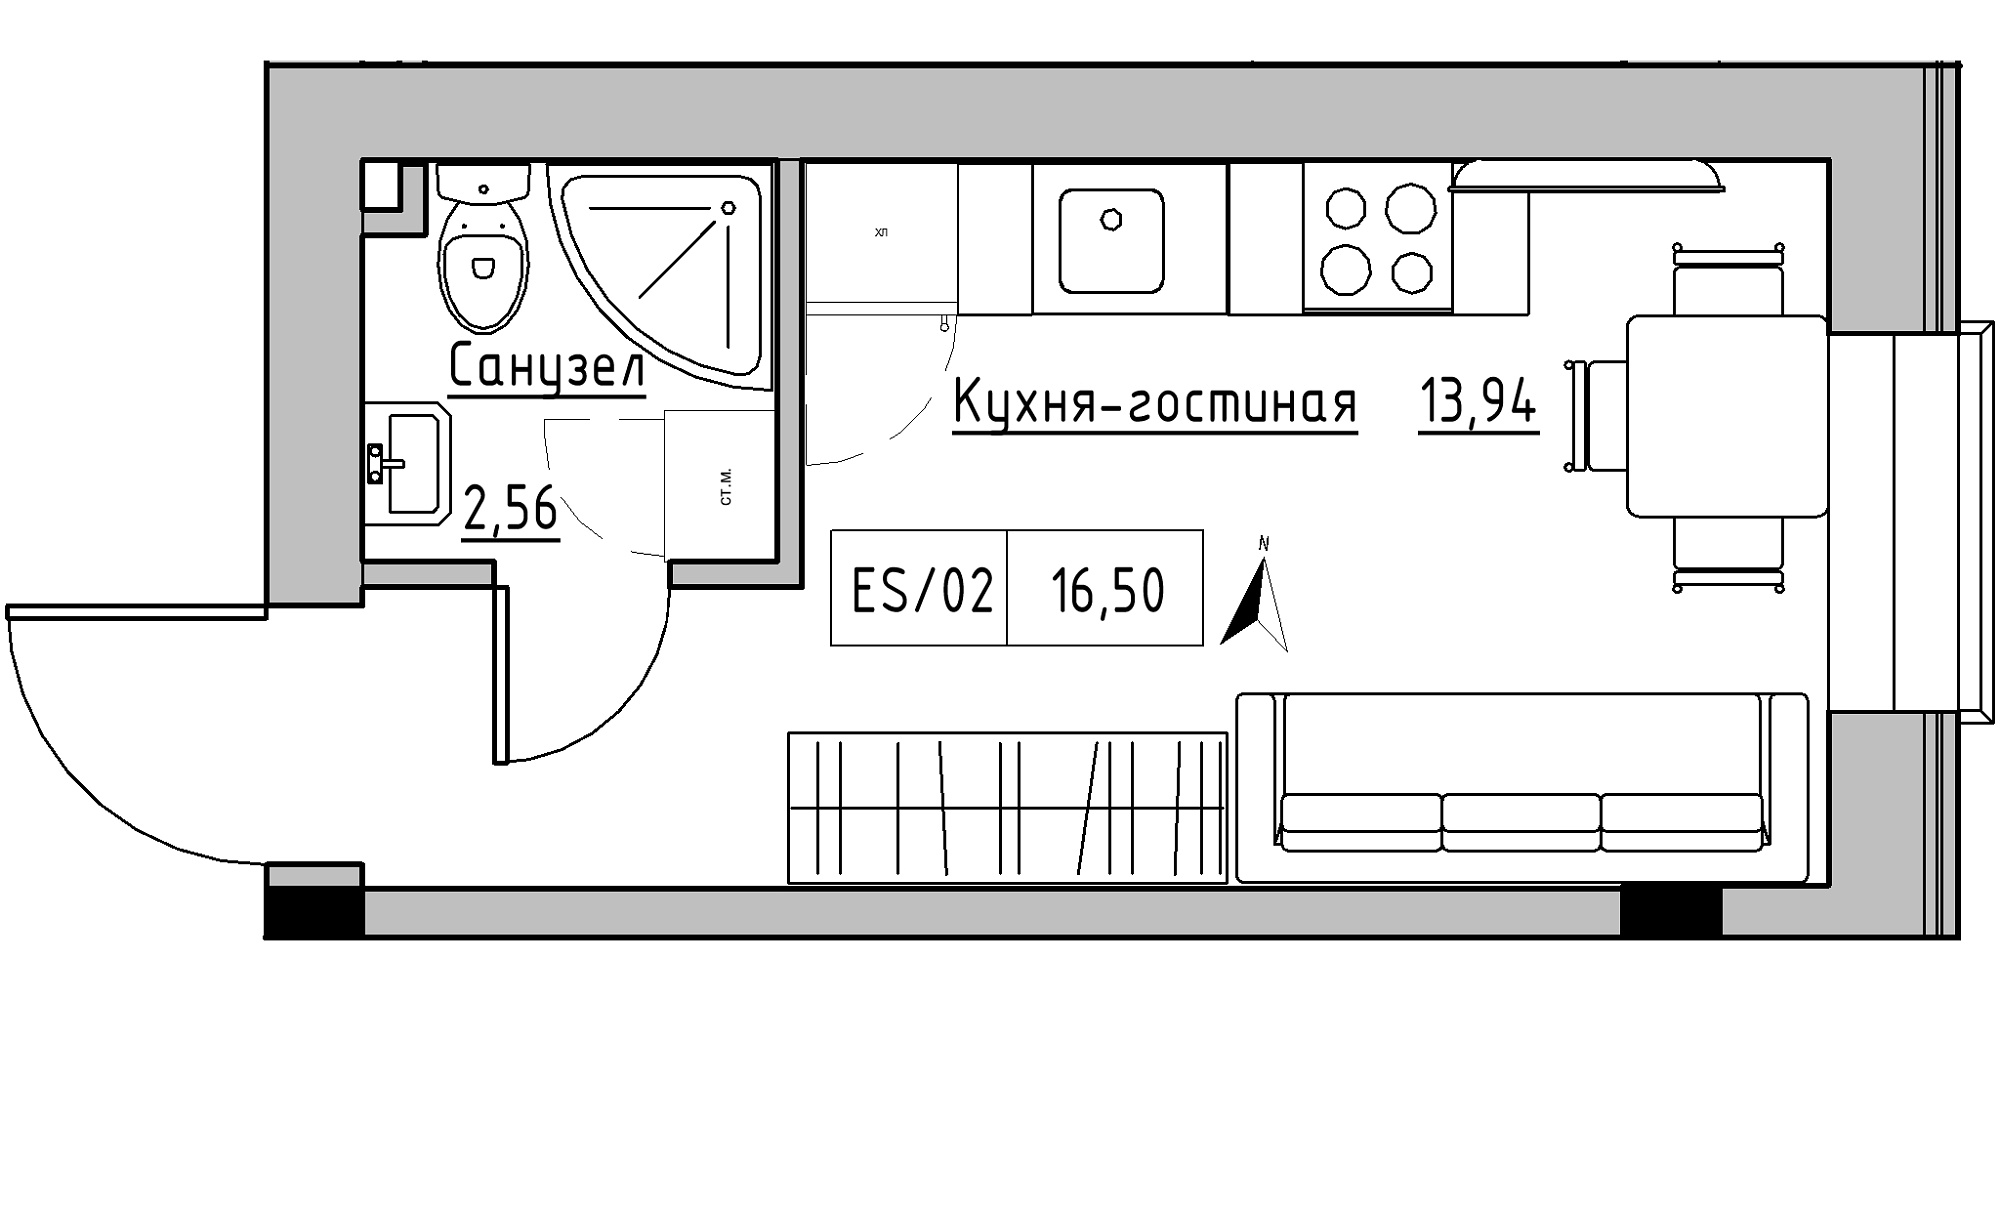 Planning Smart flats area 16.5m2, KS-015-05/0005.